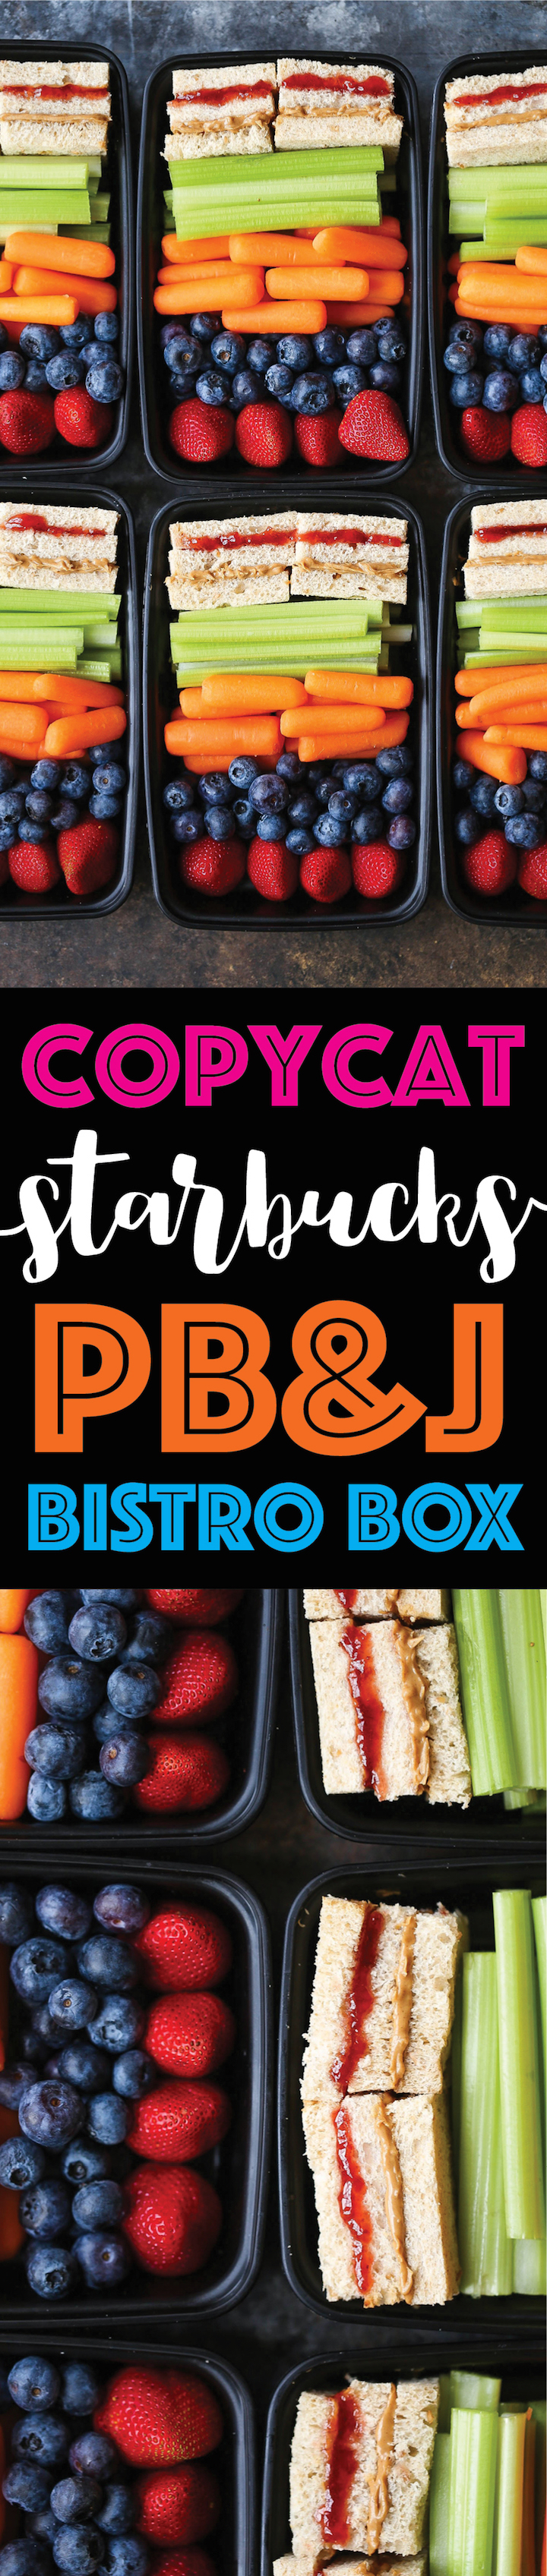 Starbucks PB&J Bistro Box with Celery, Carrots and Berries